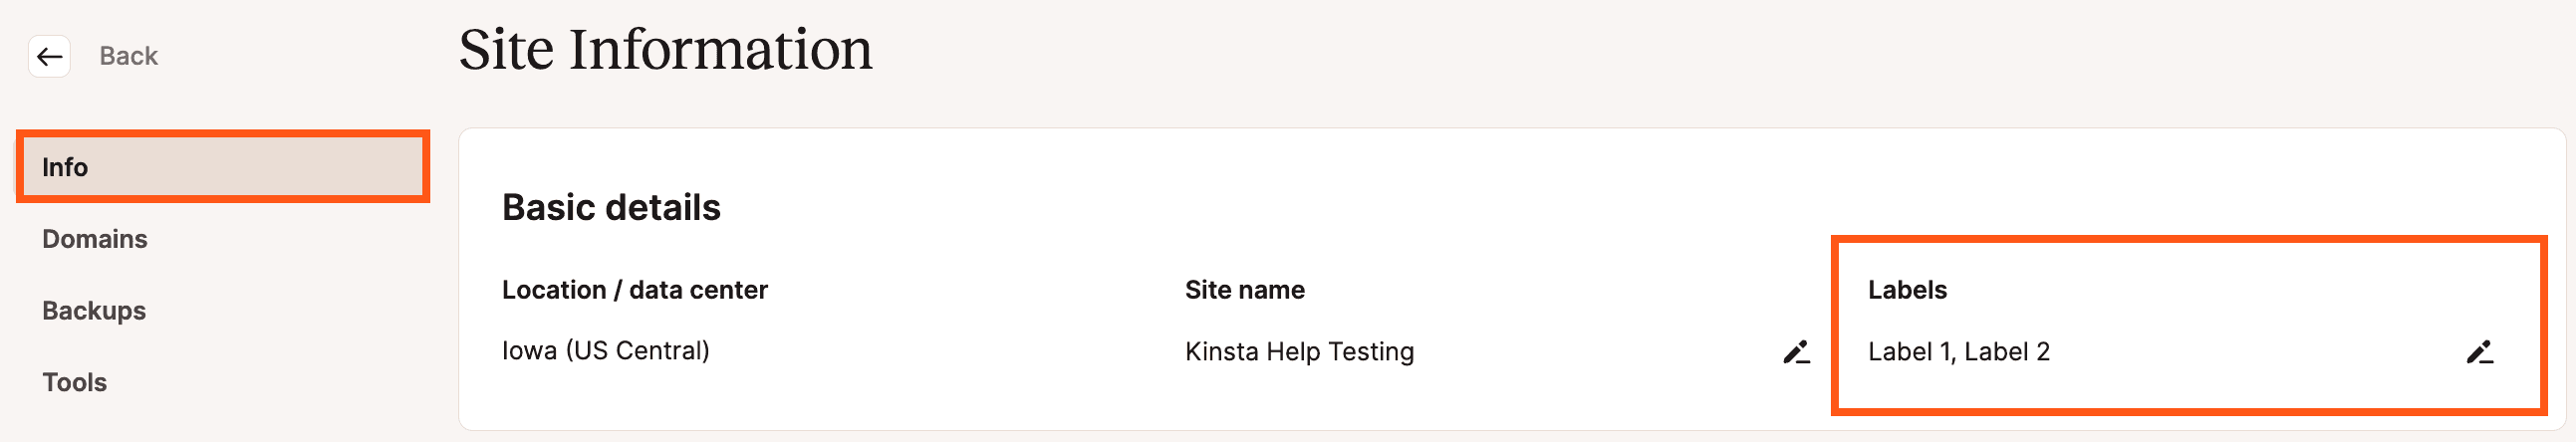 MyKinstaのサイトの情報画面でサイトラベルが確認できる